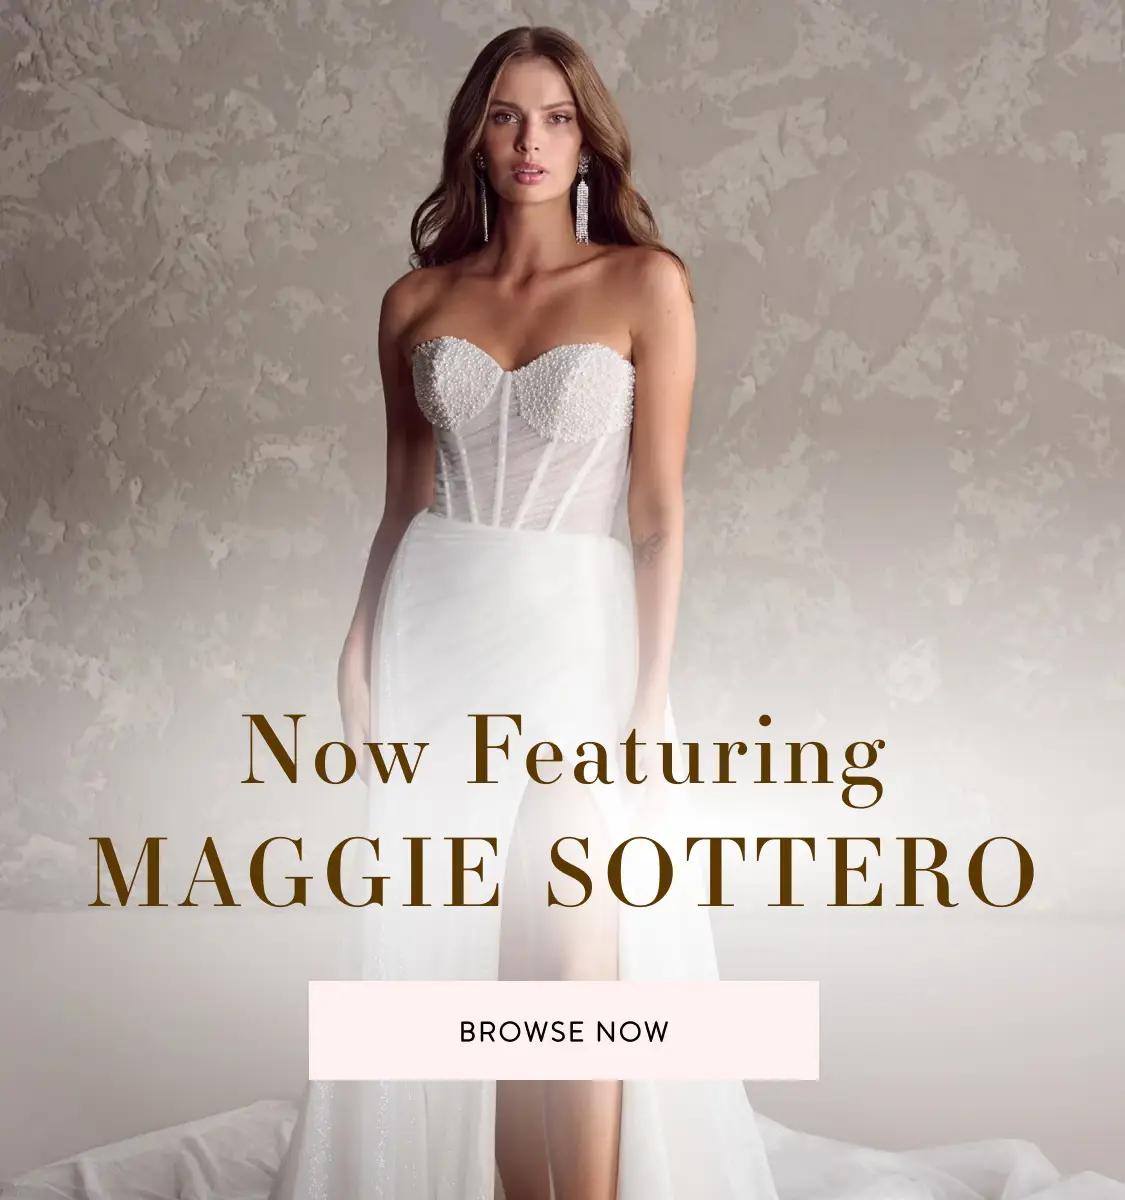 Maggie Sottero Bridal Banner Mobile